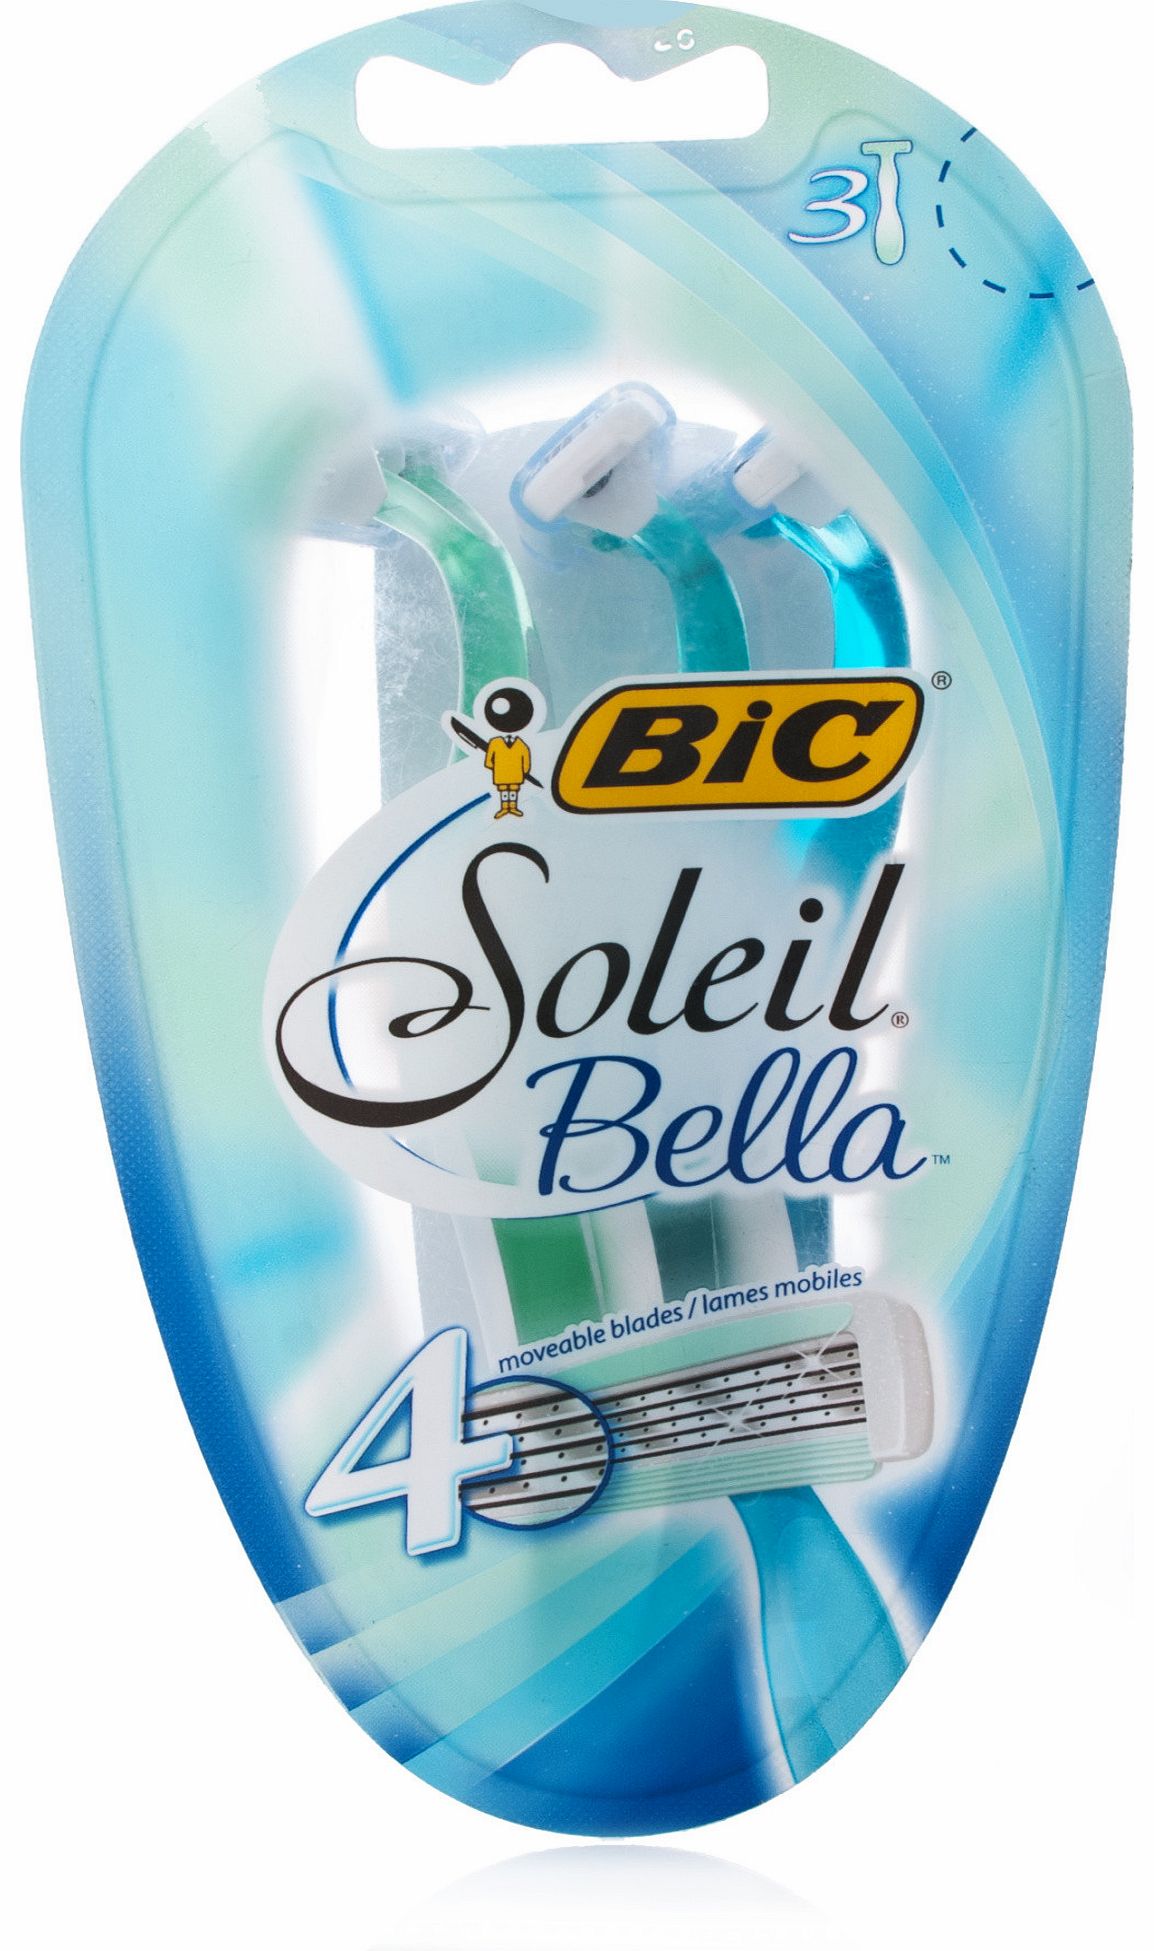 Bic Soleil Bella Disposable Razors